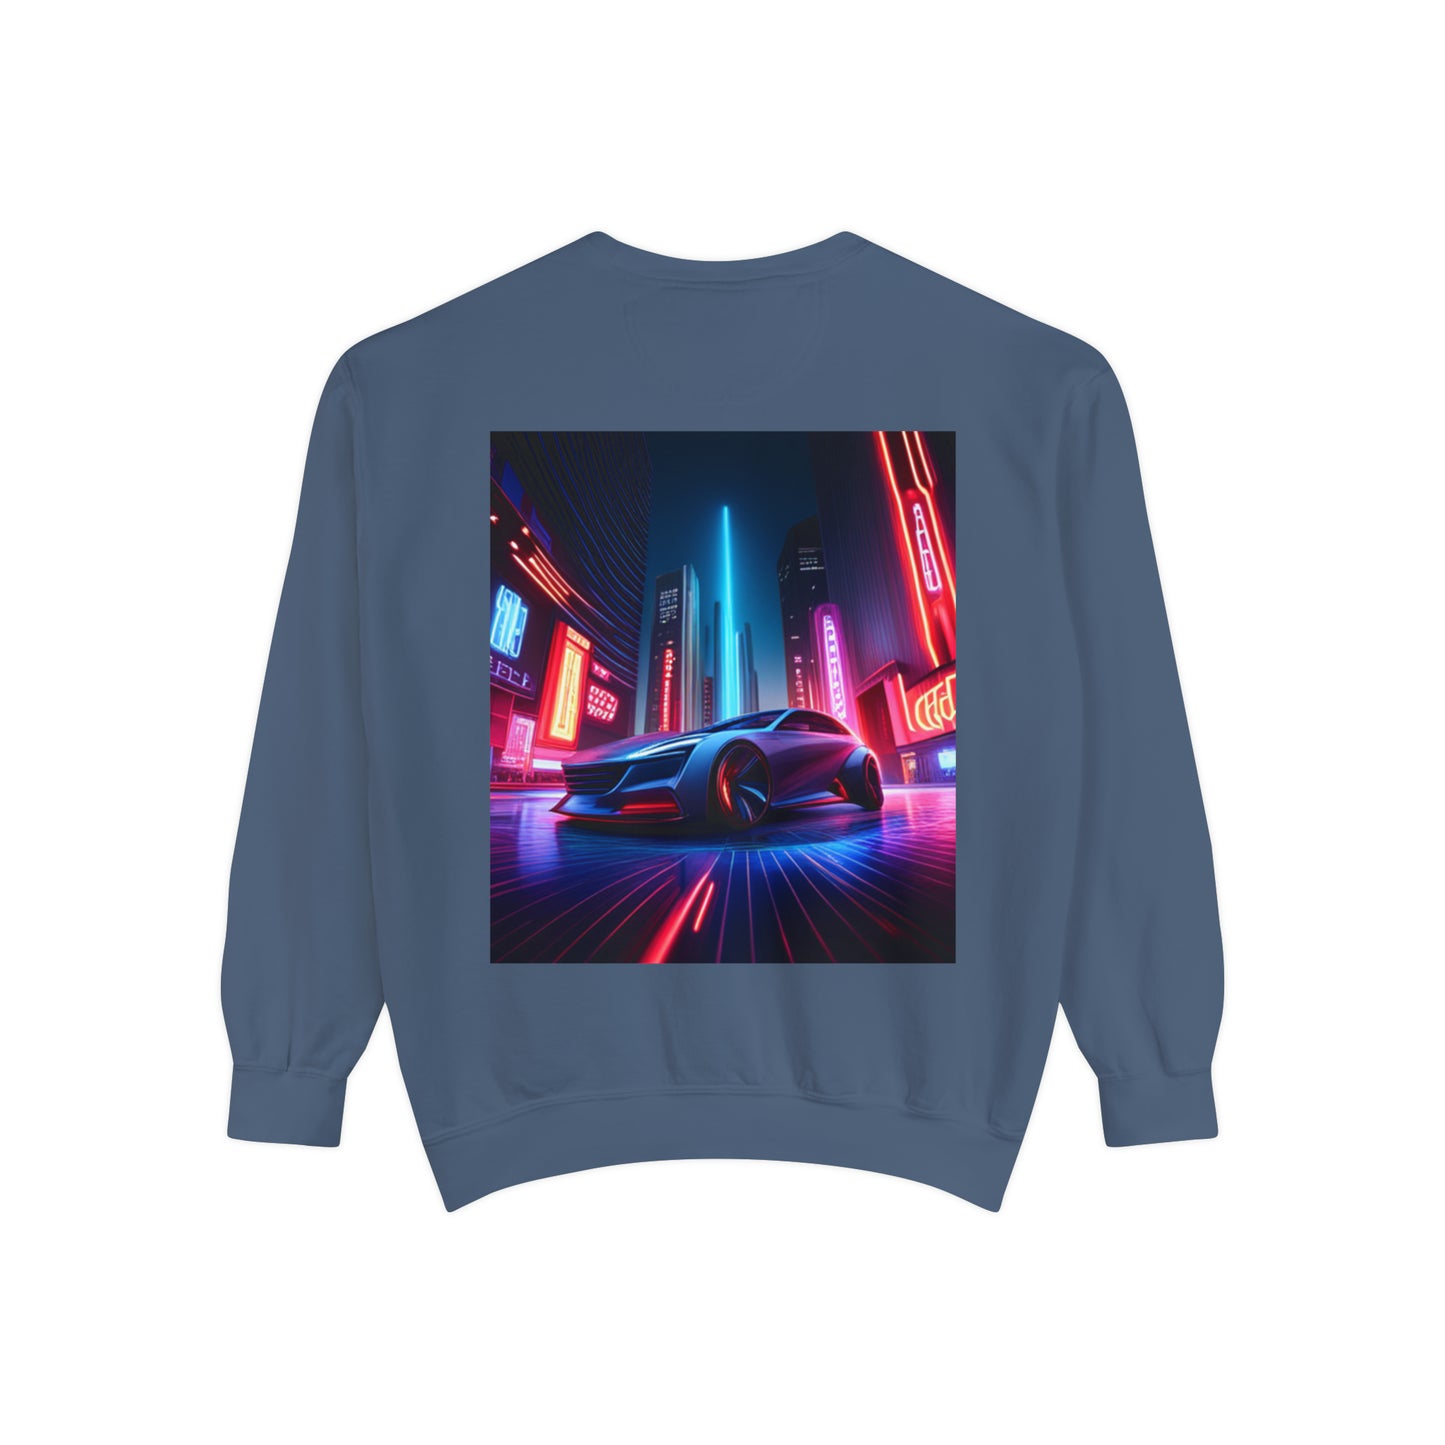 Copy of Unisex Garment-Dyed Sweatshirt